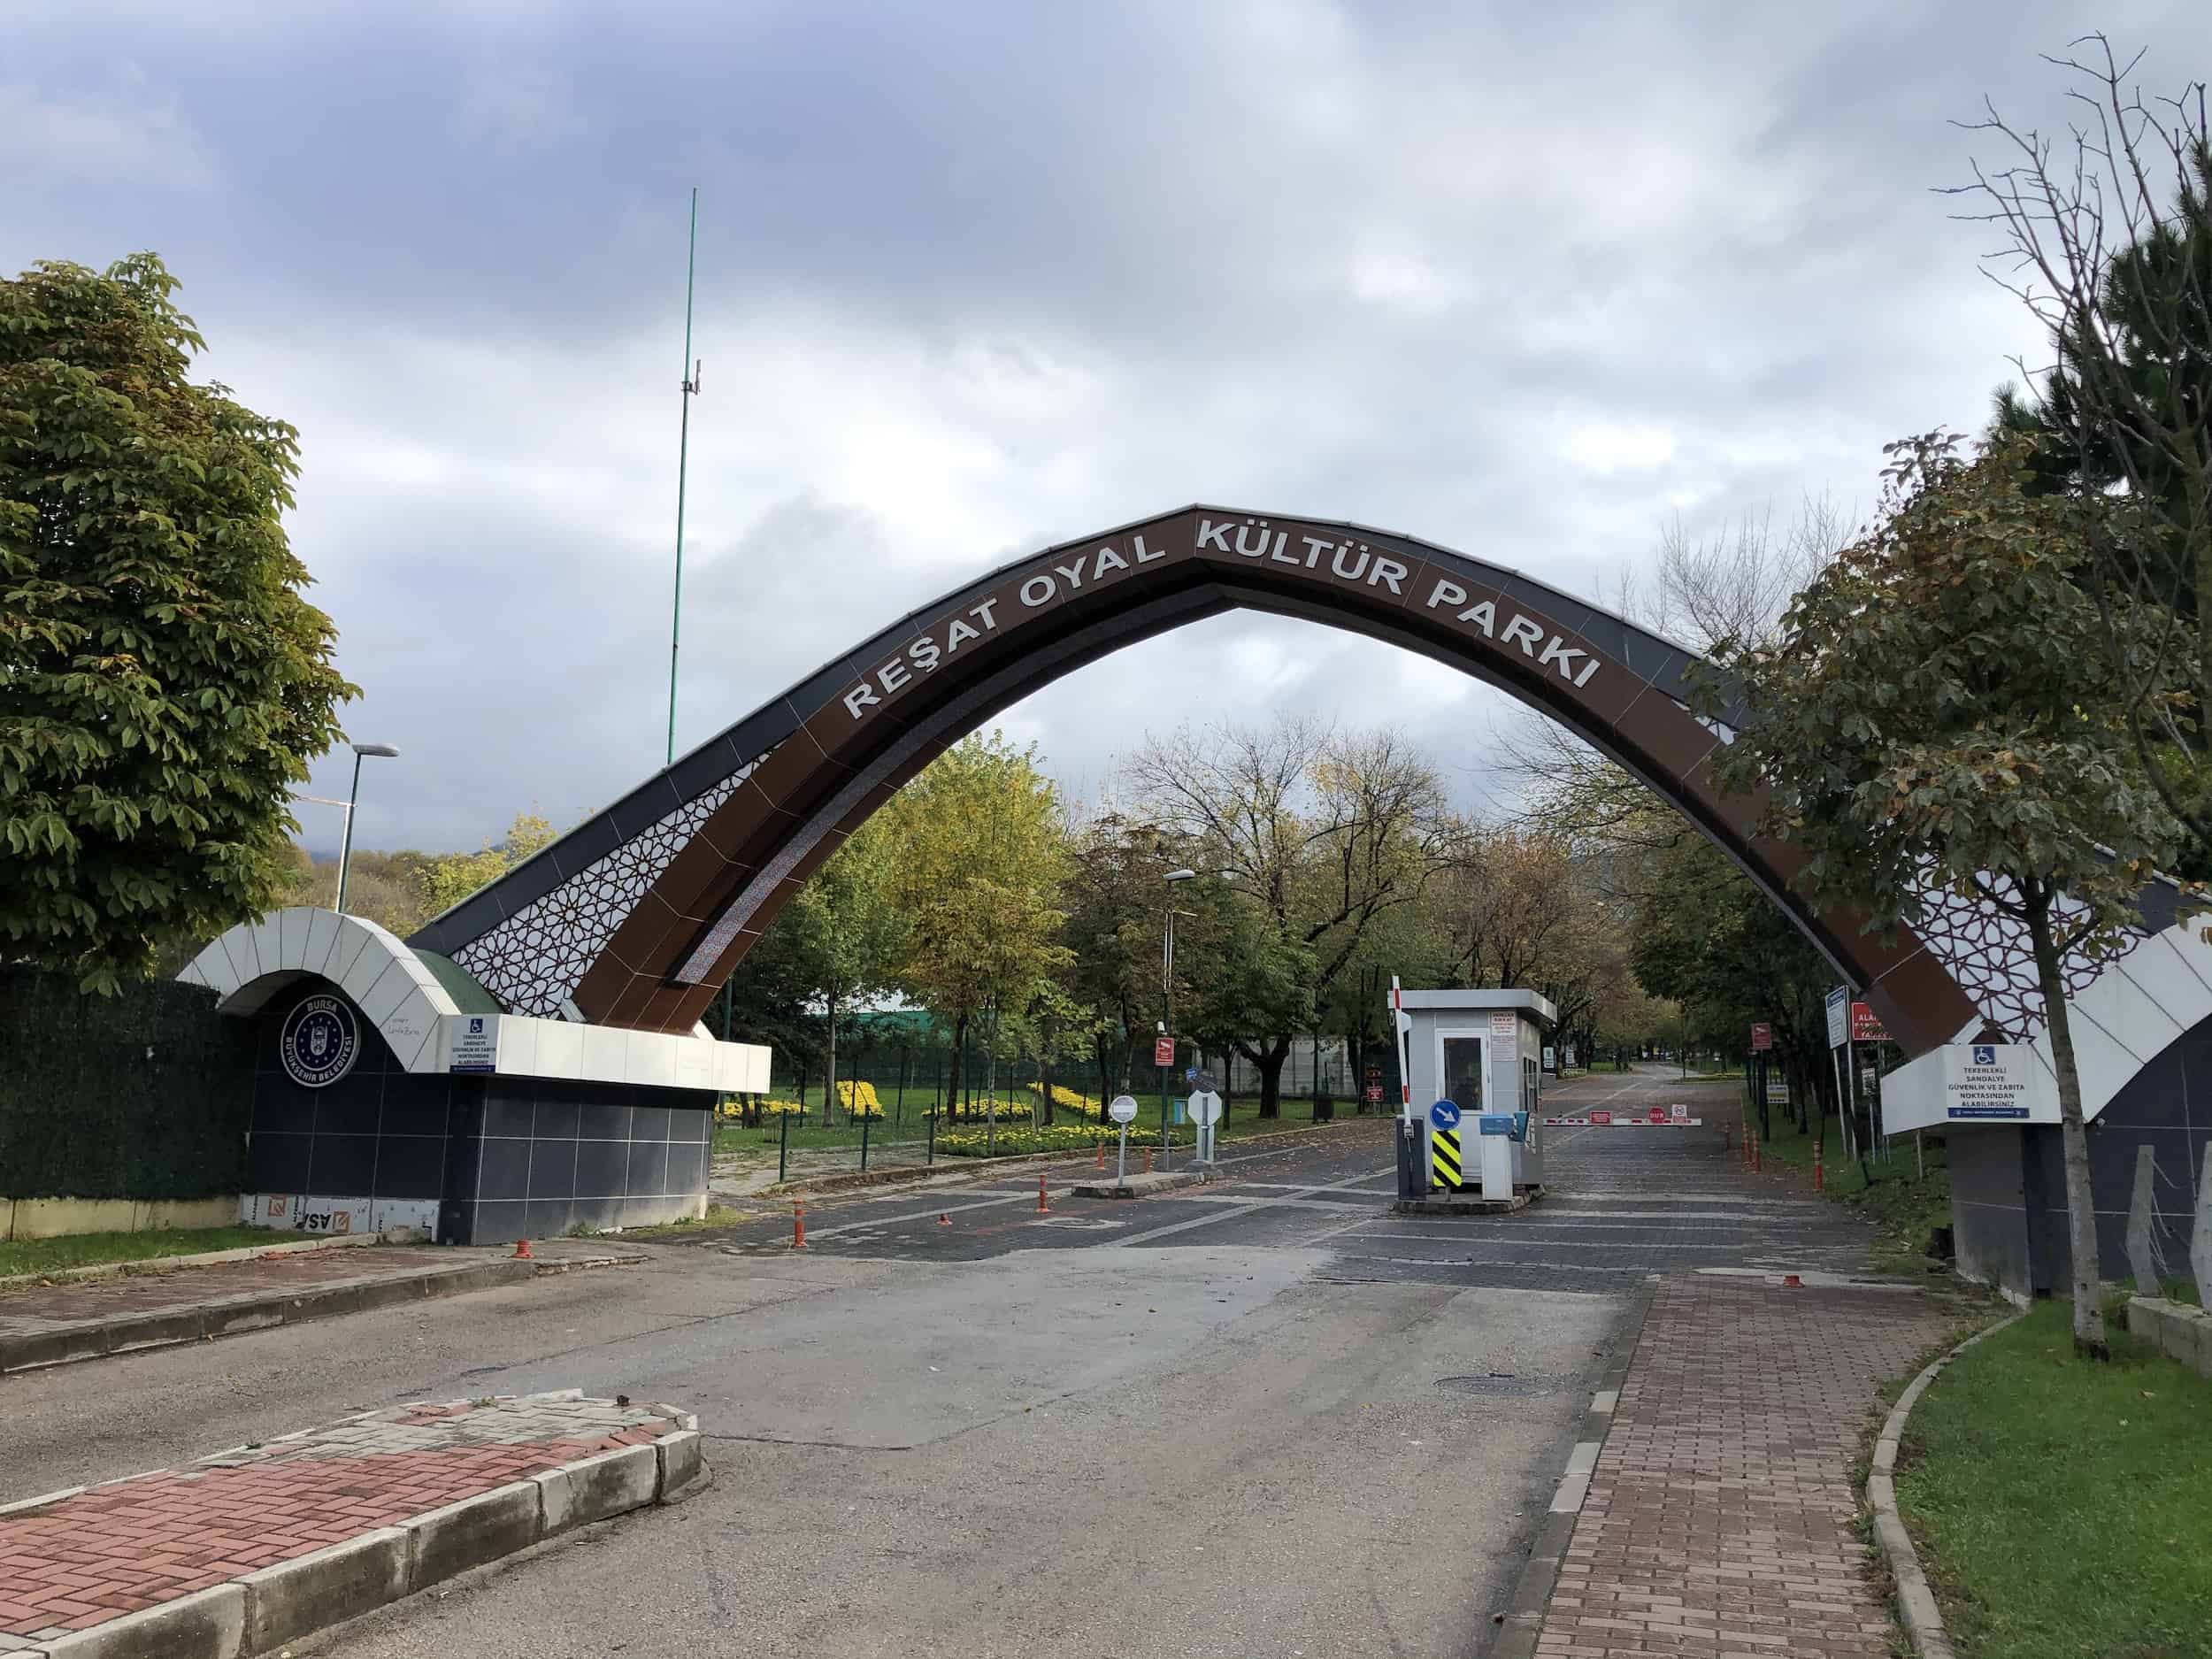 North entrance to Reşat Oyal Culture Park in Bursa, Turkey